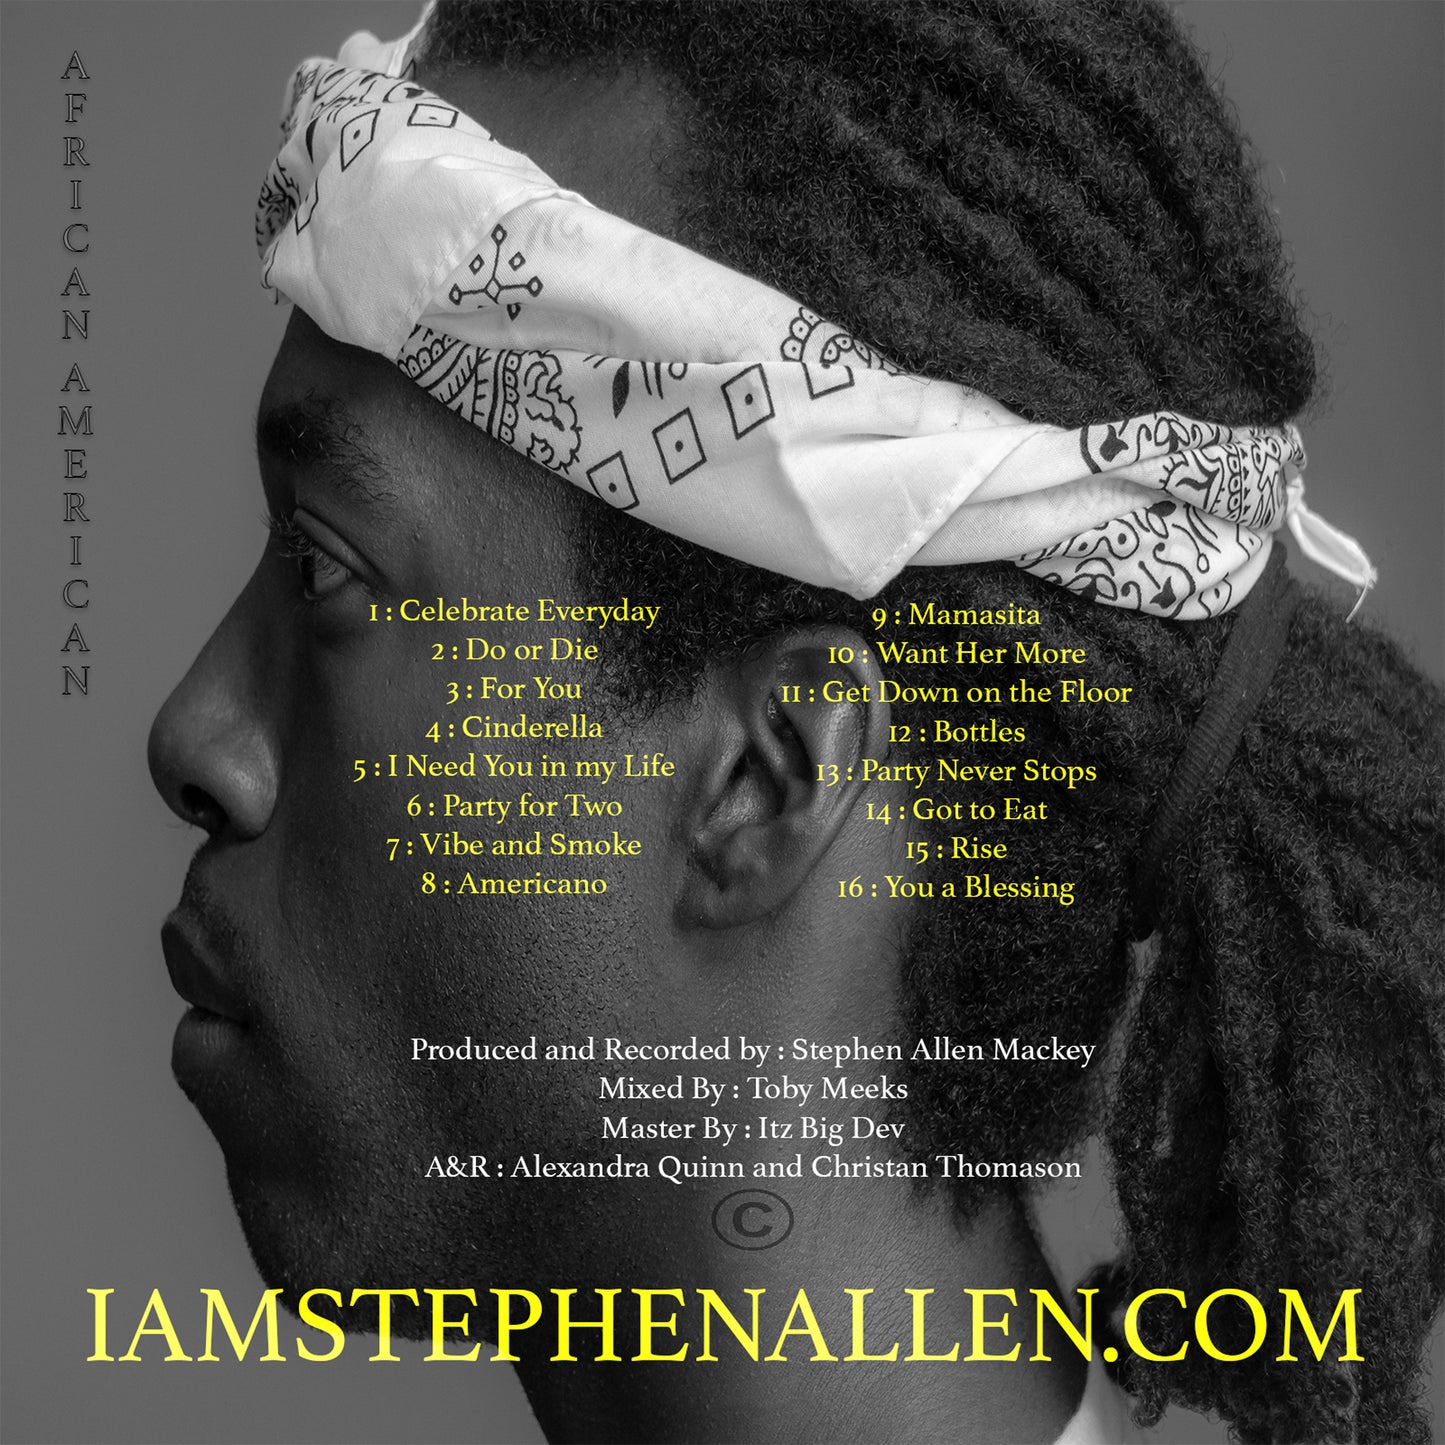 Stephen Allen Music - African American ( Album )